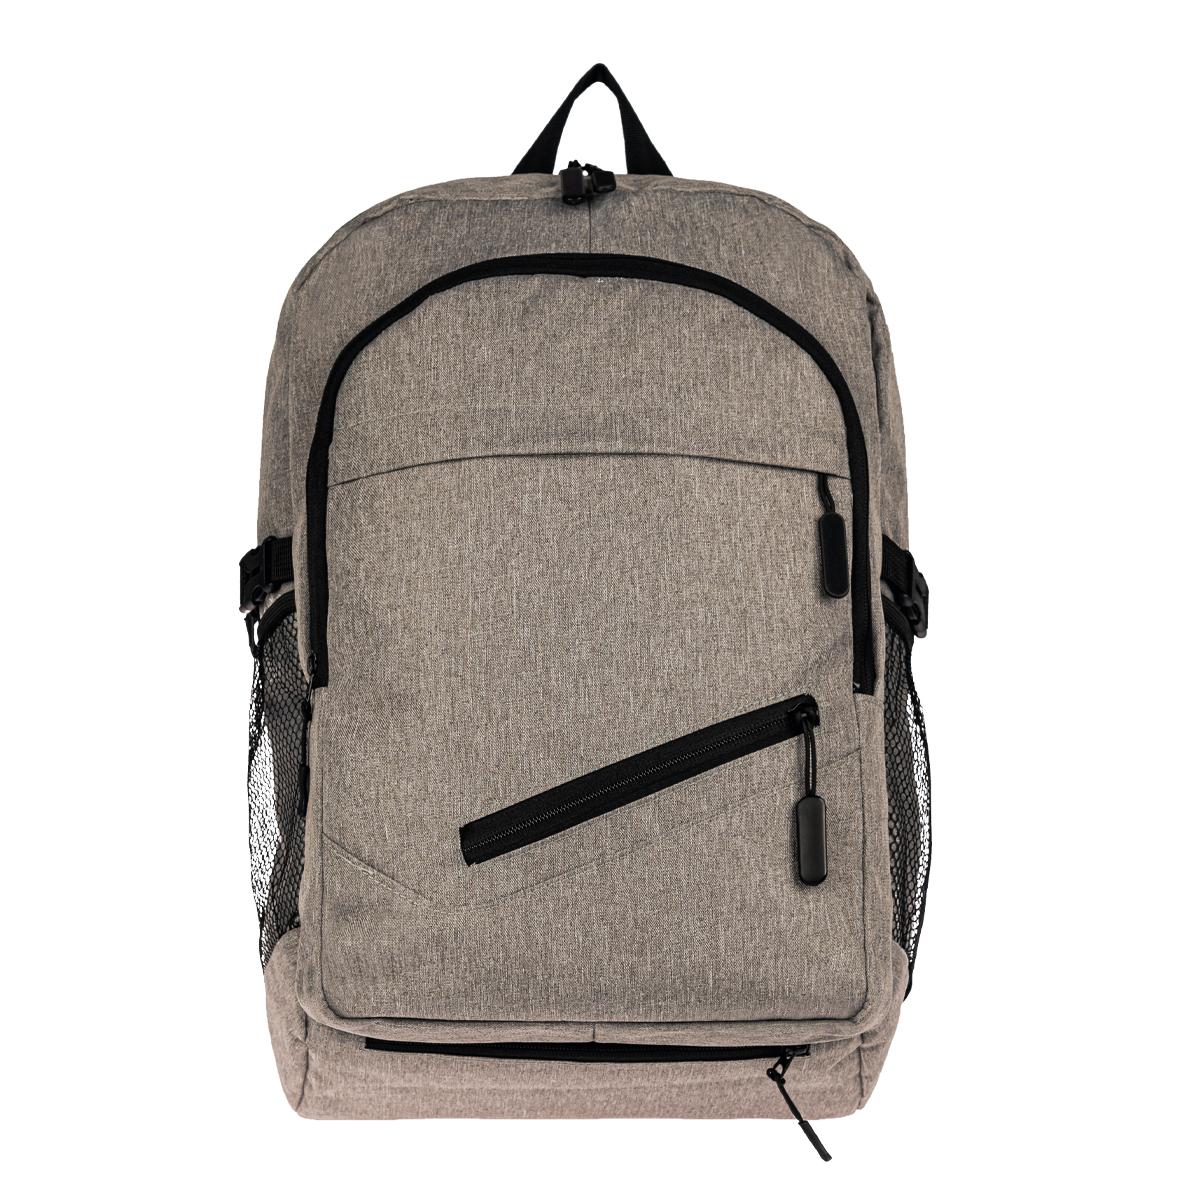 Hamish Laptop Backpack Product Image